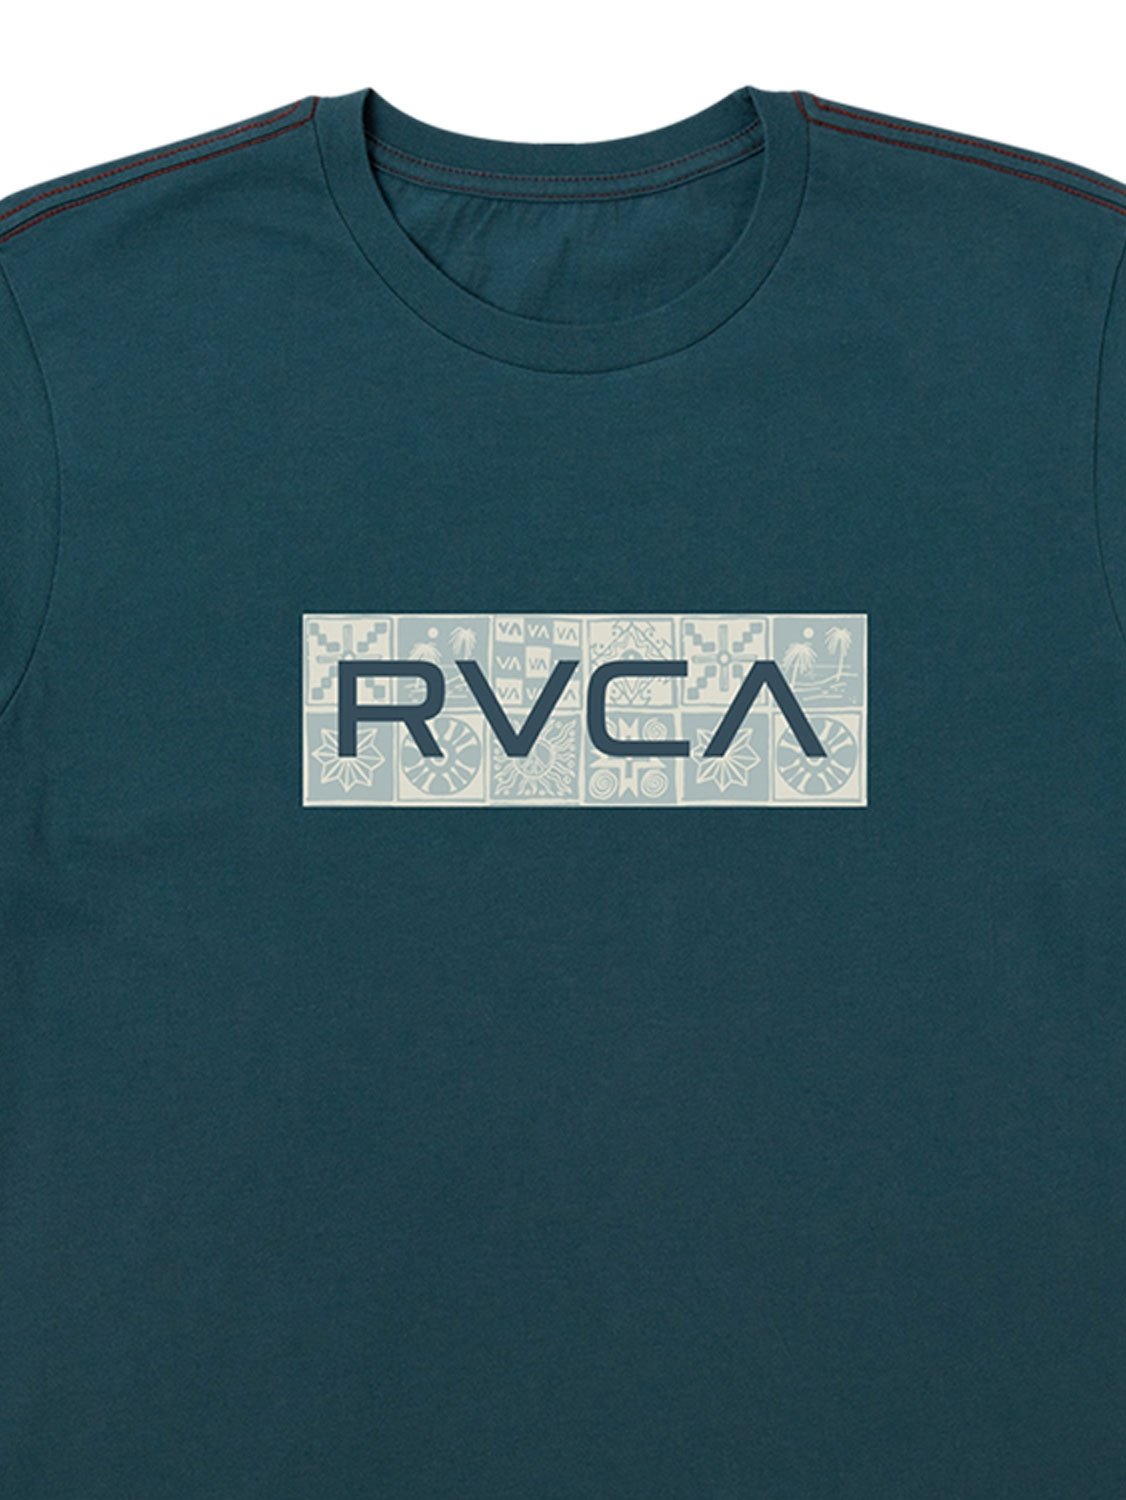 RVCA Men's Bug Filler T-Shirt